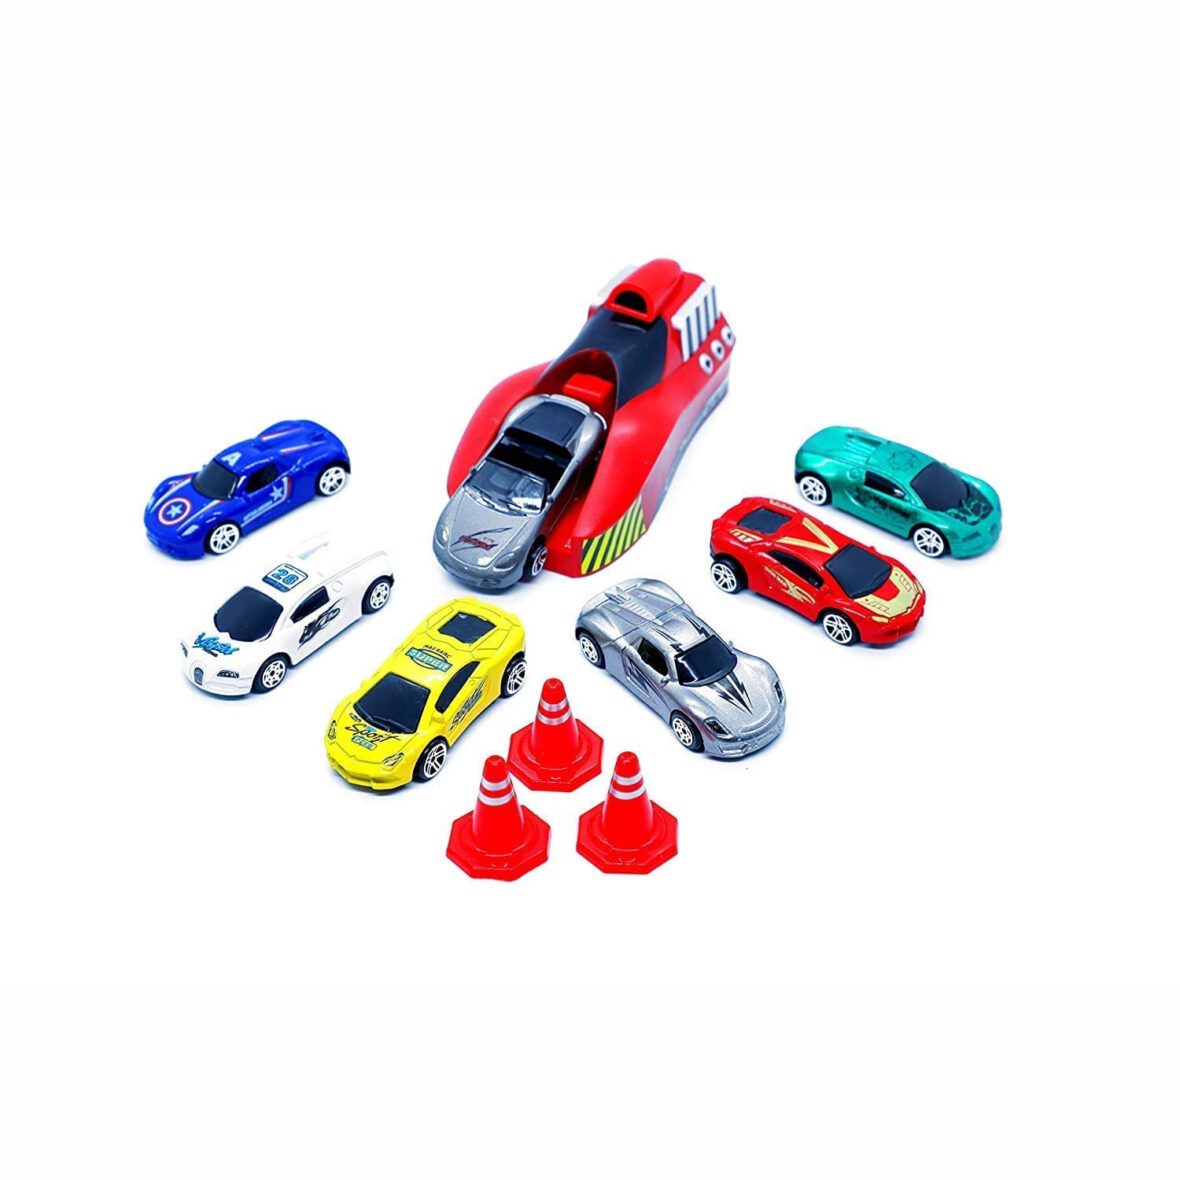 U Smile 7 Pcs Metal Die Cast Car with Rapid Launcher Game for Kids – Multi Color